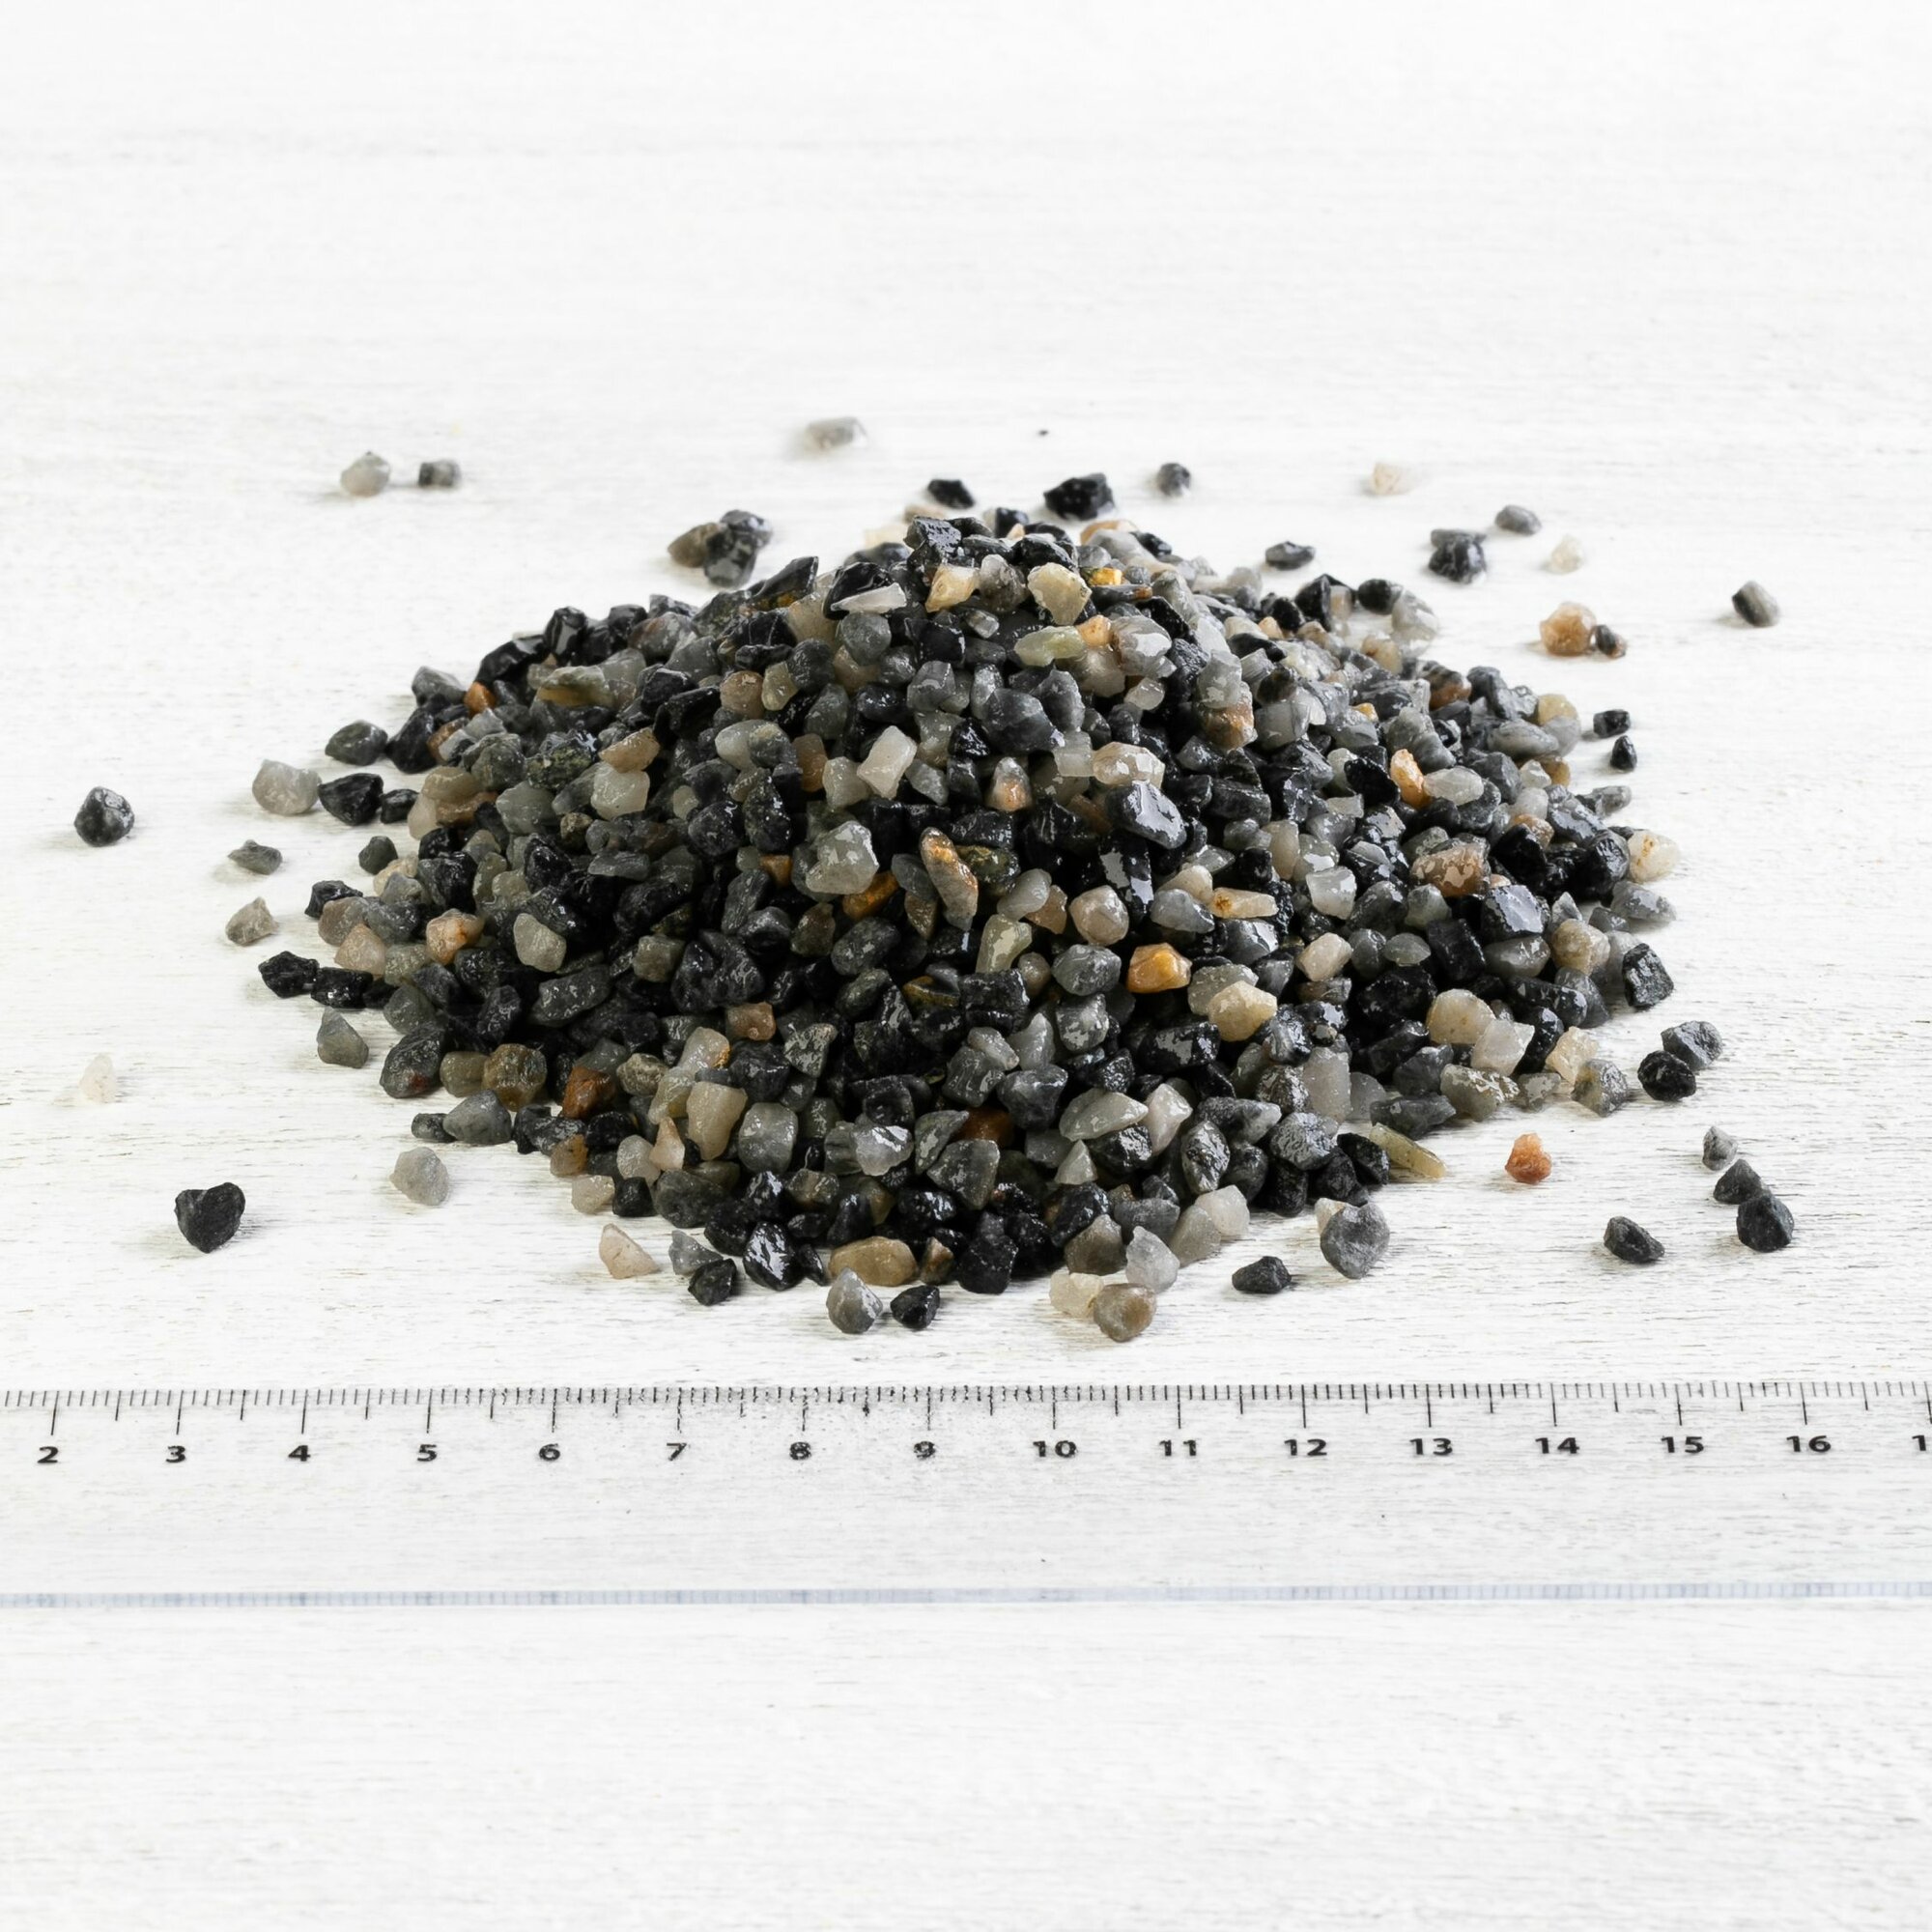 Кварц серый бобровский кварцит фр. 2-5 мм, 5 кг (341). Каменная крошка, декоративный грунт